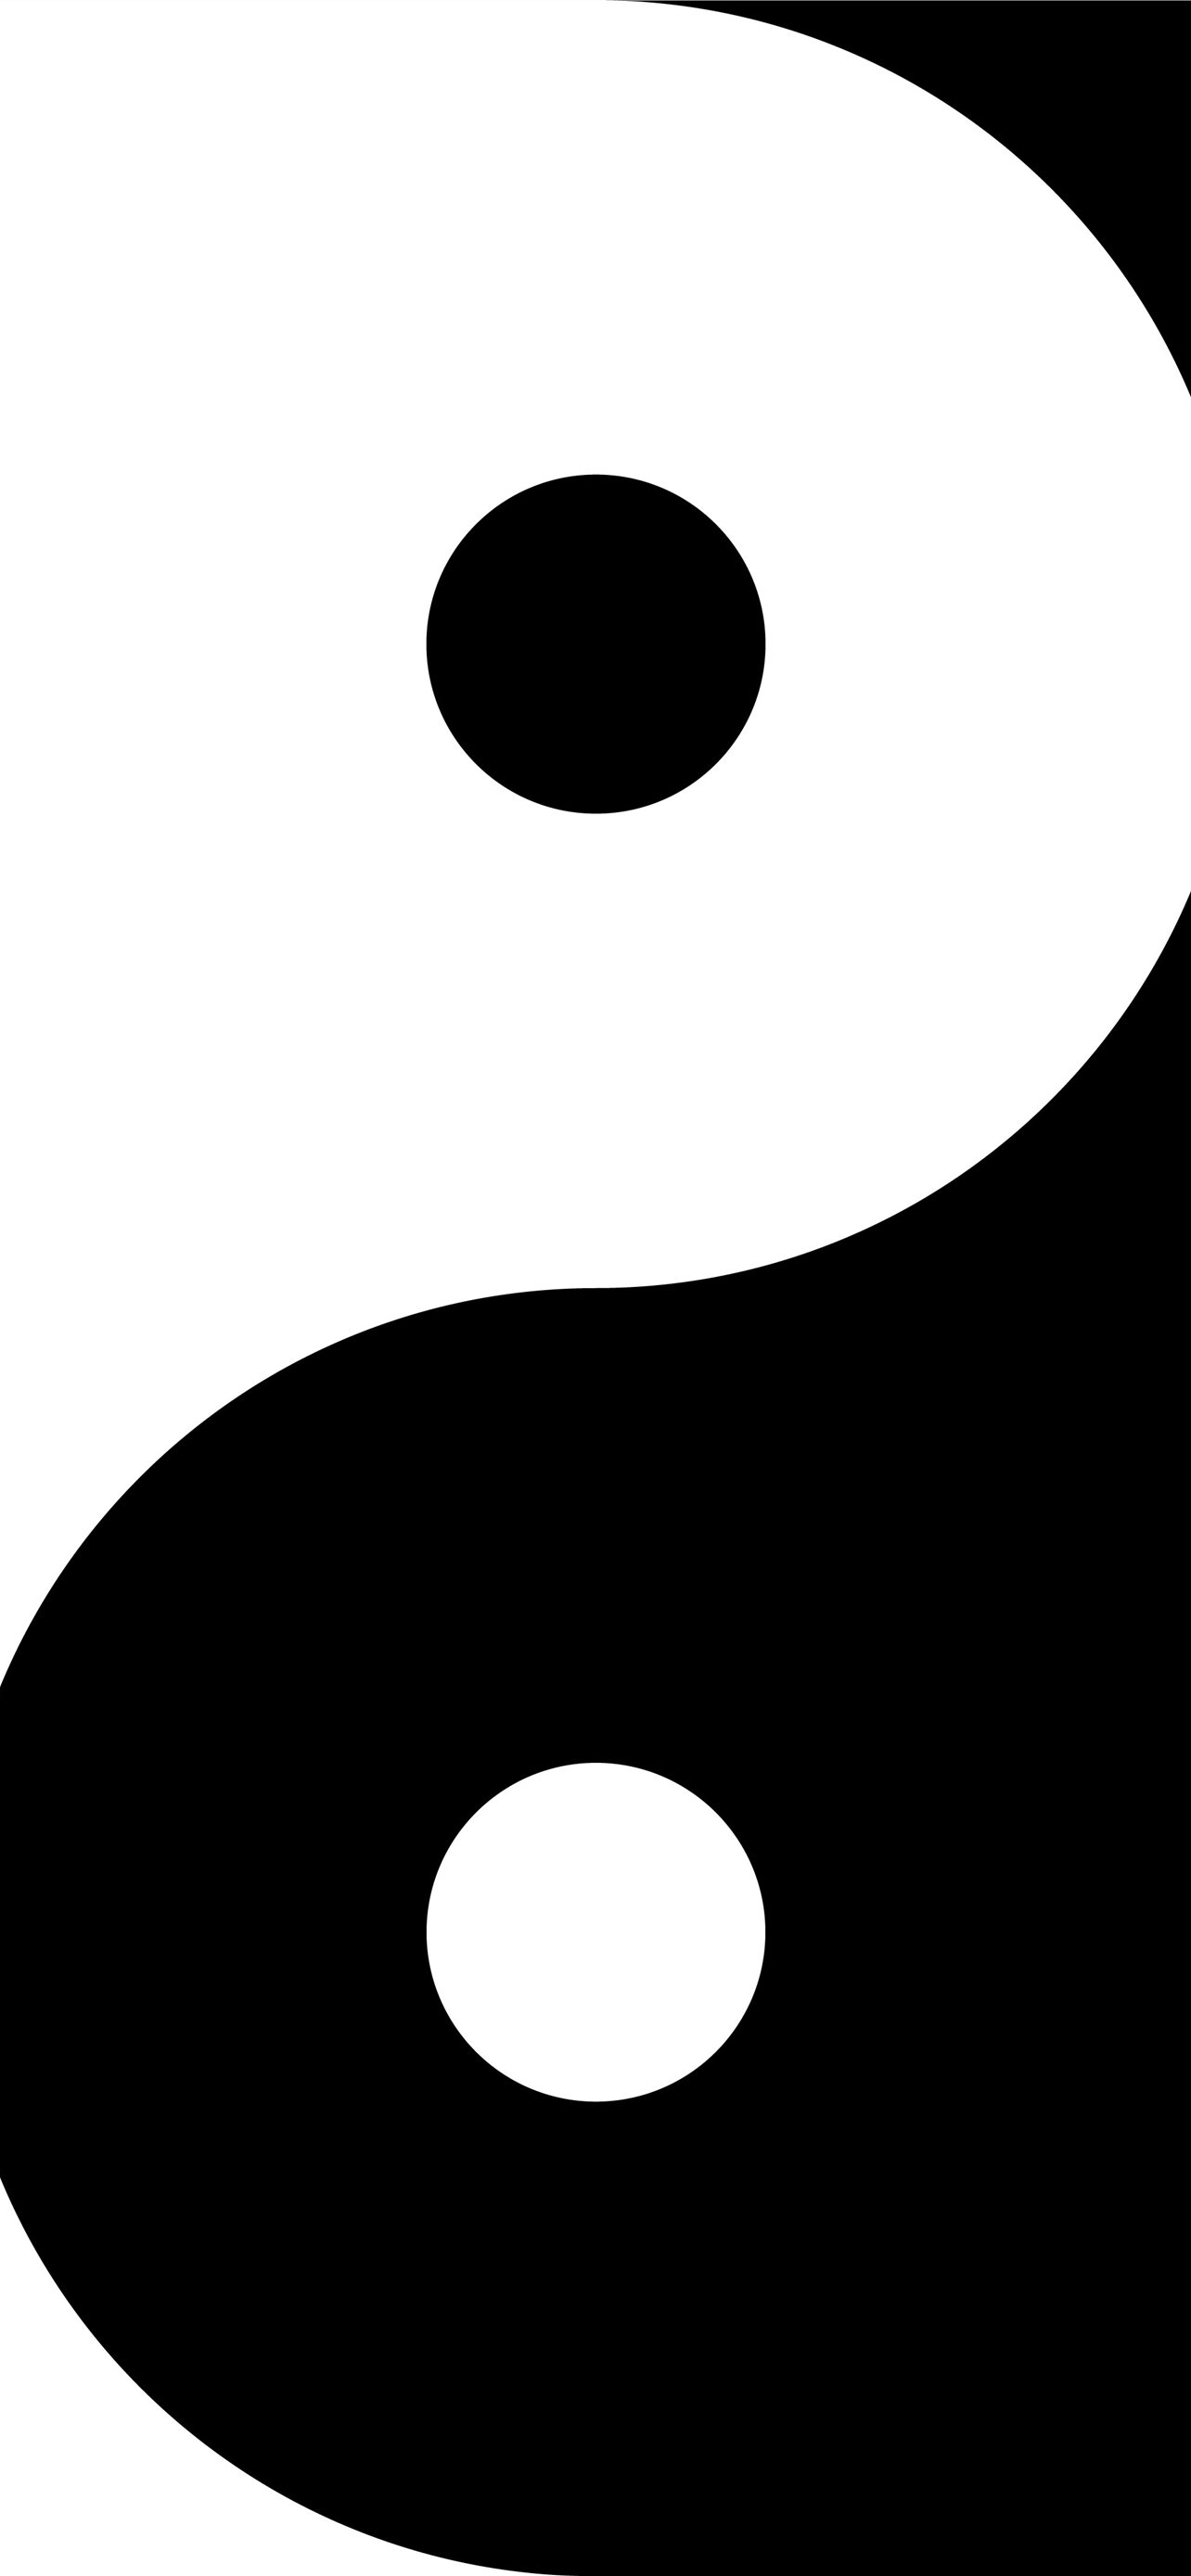 yin and yang iPhone wallpaper 